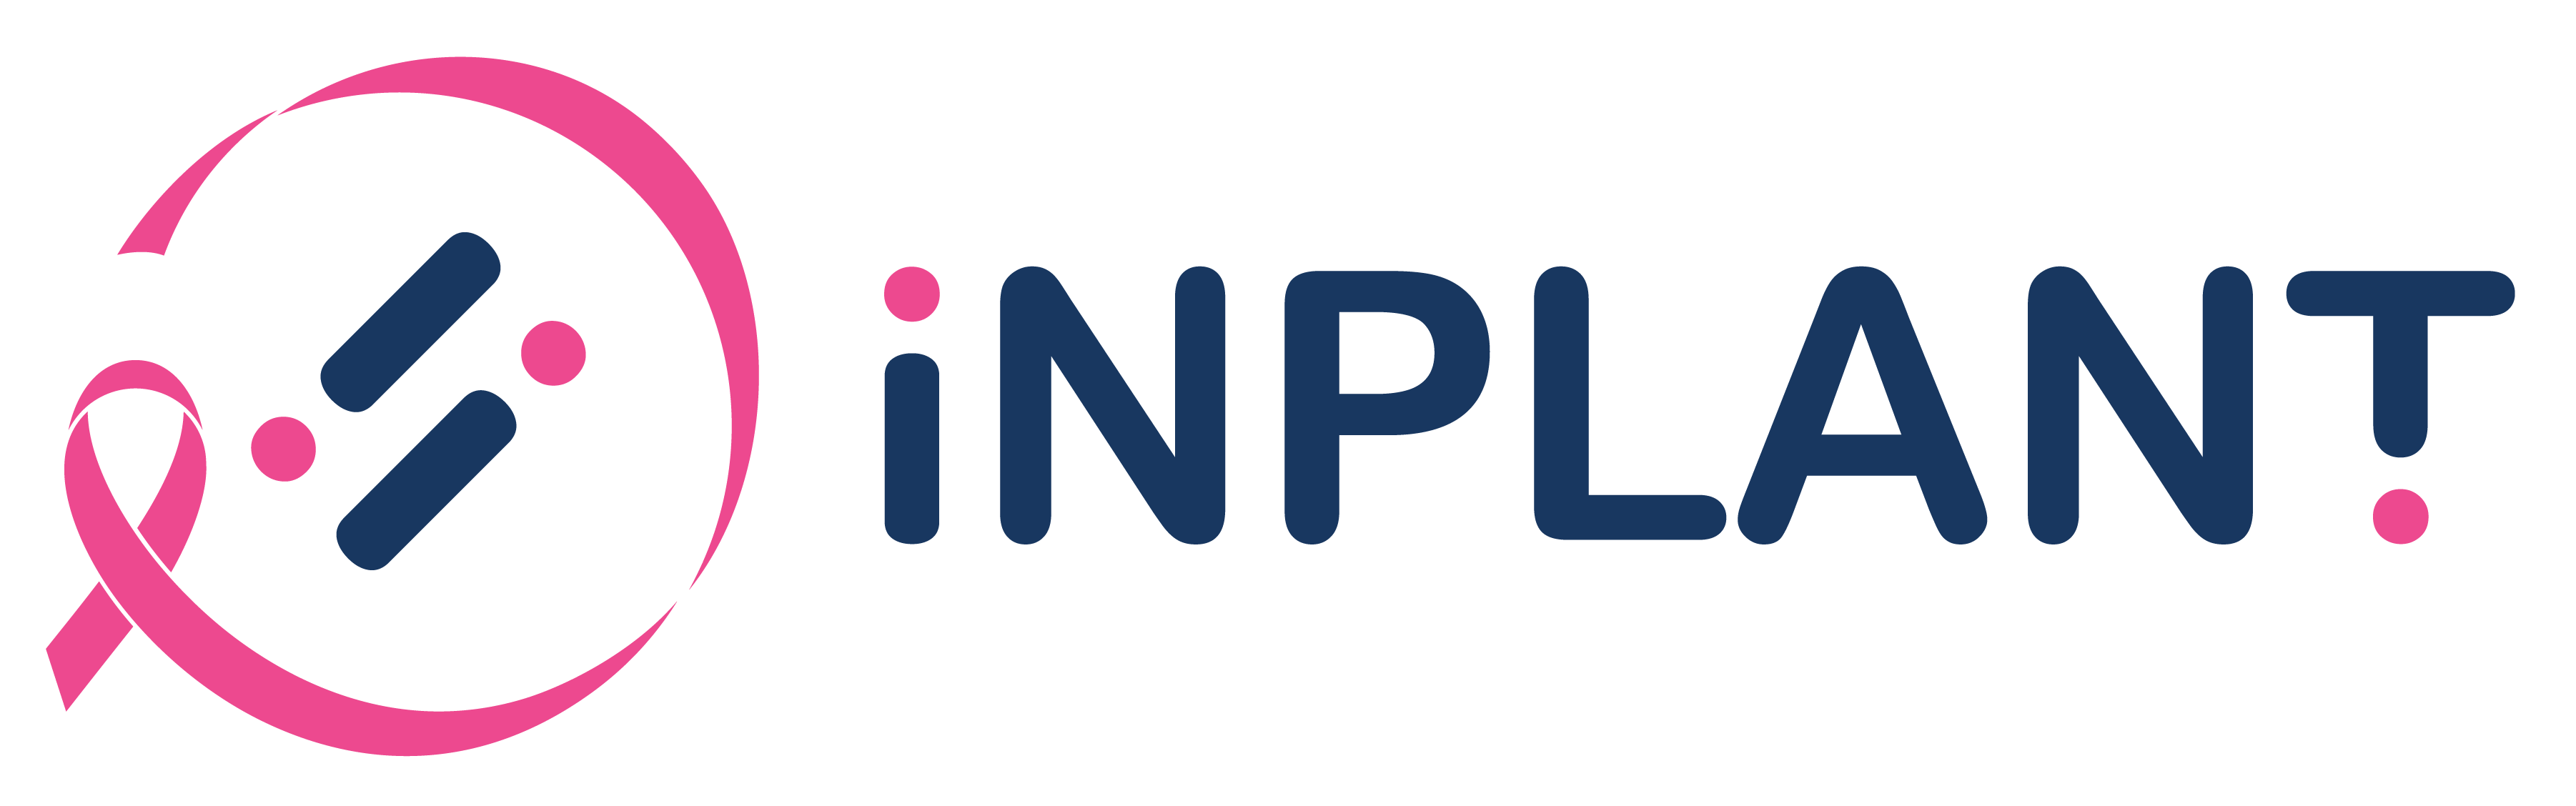 iNPLANT_Logo_Transparent